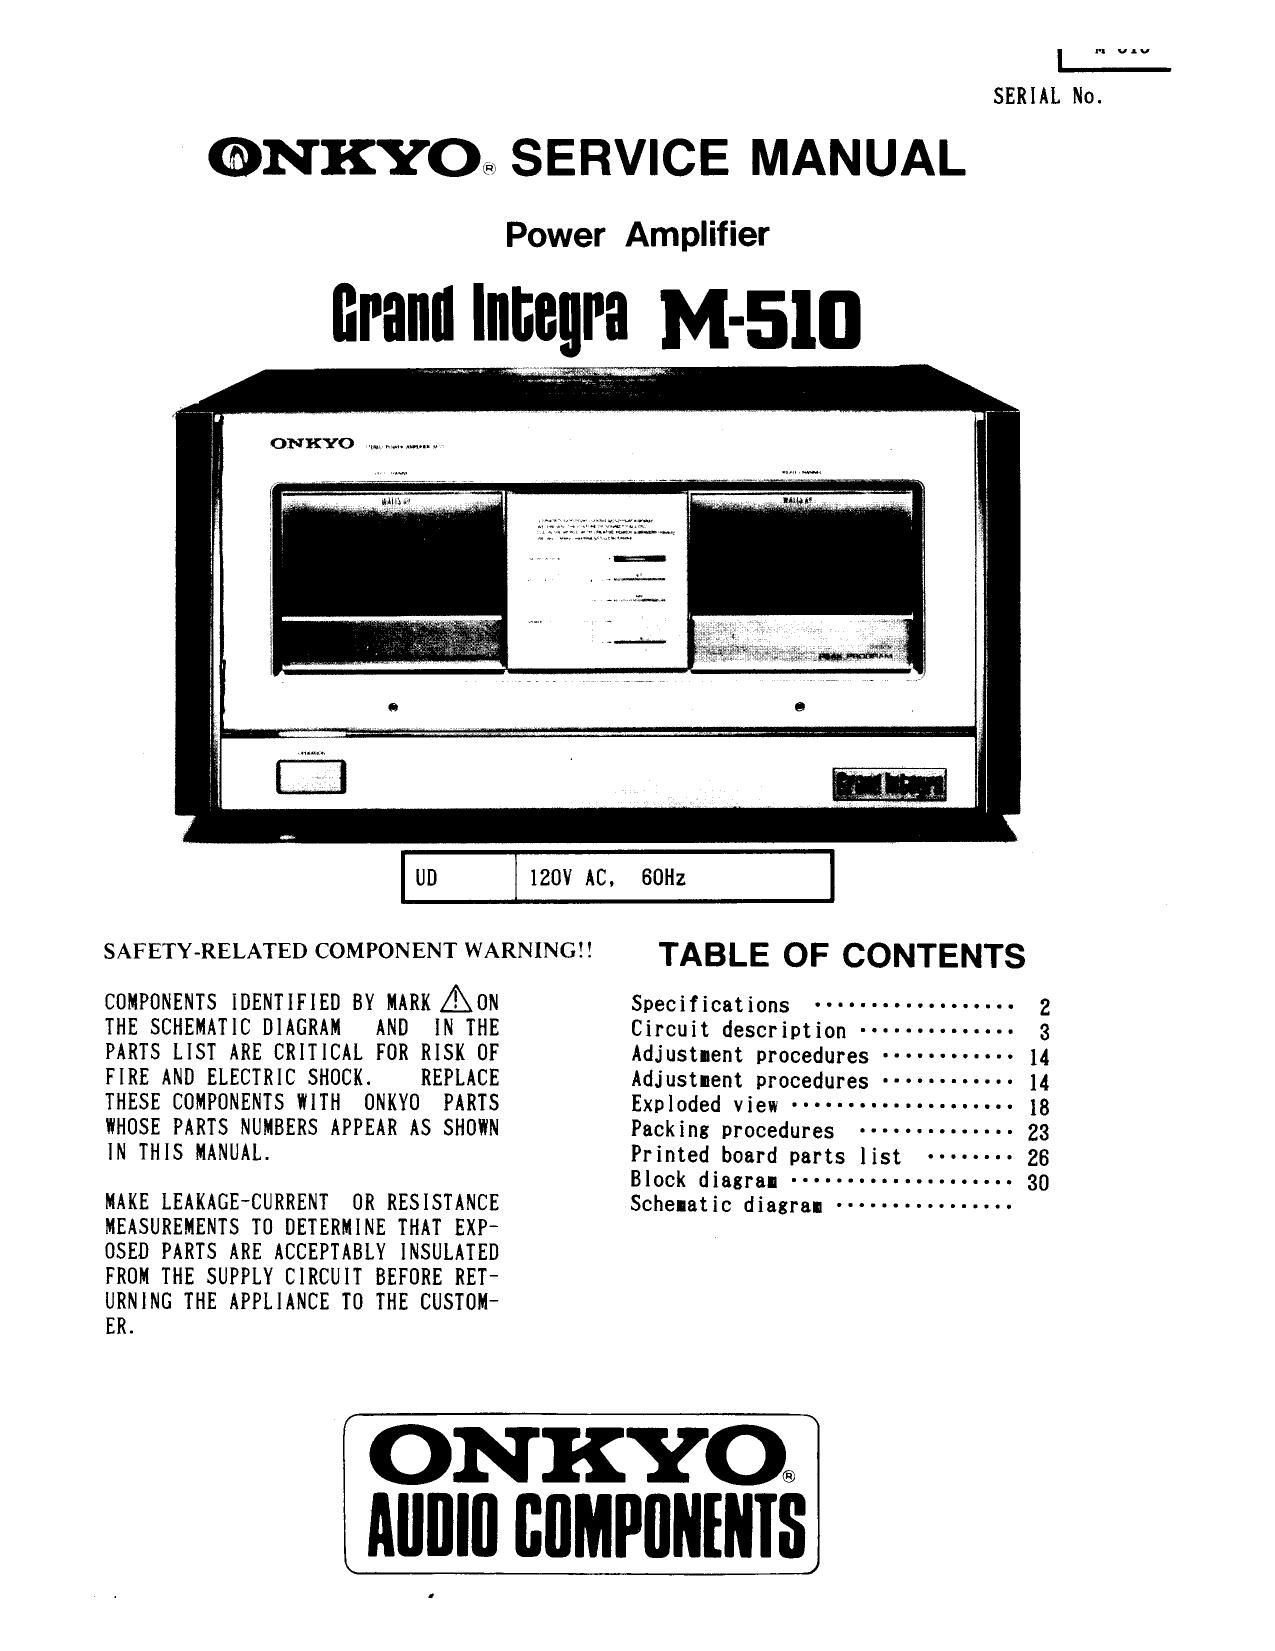 Onkyo Grand Integra M 510 Schematic